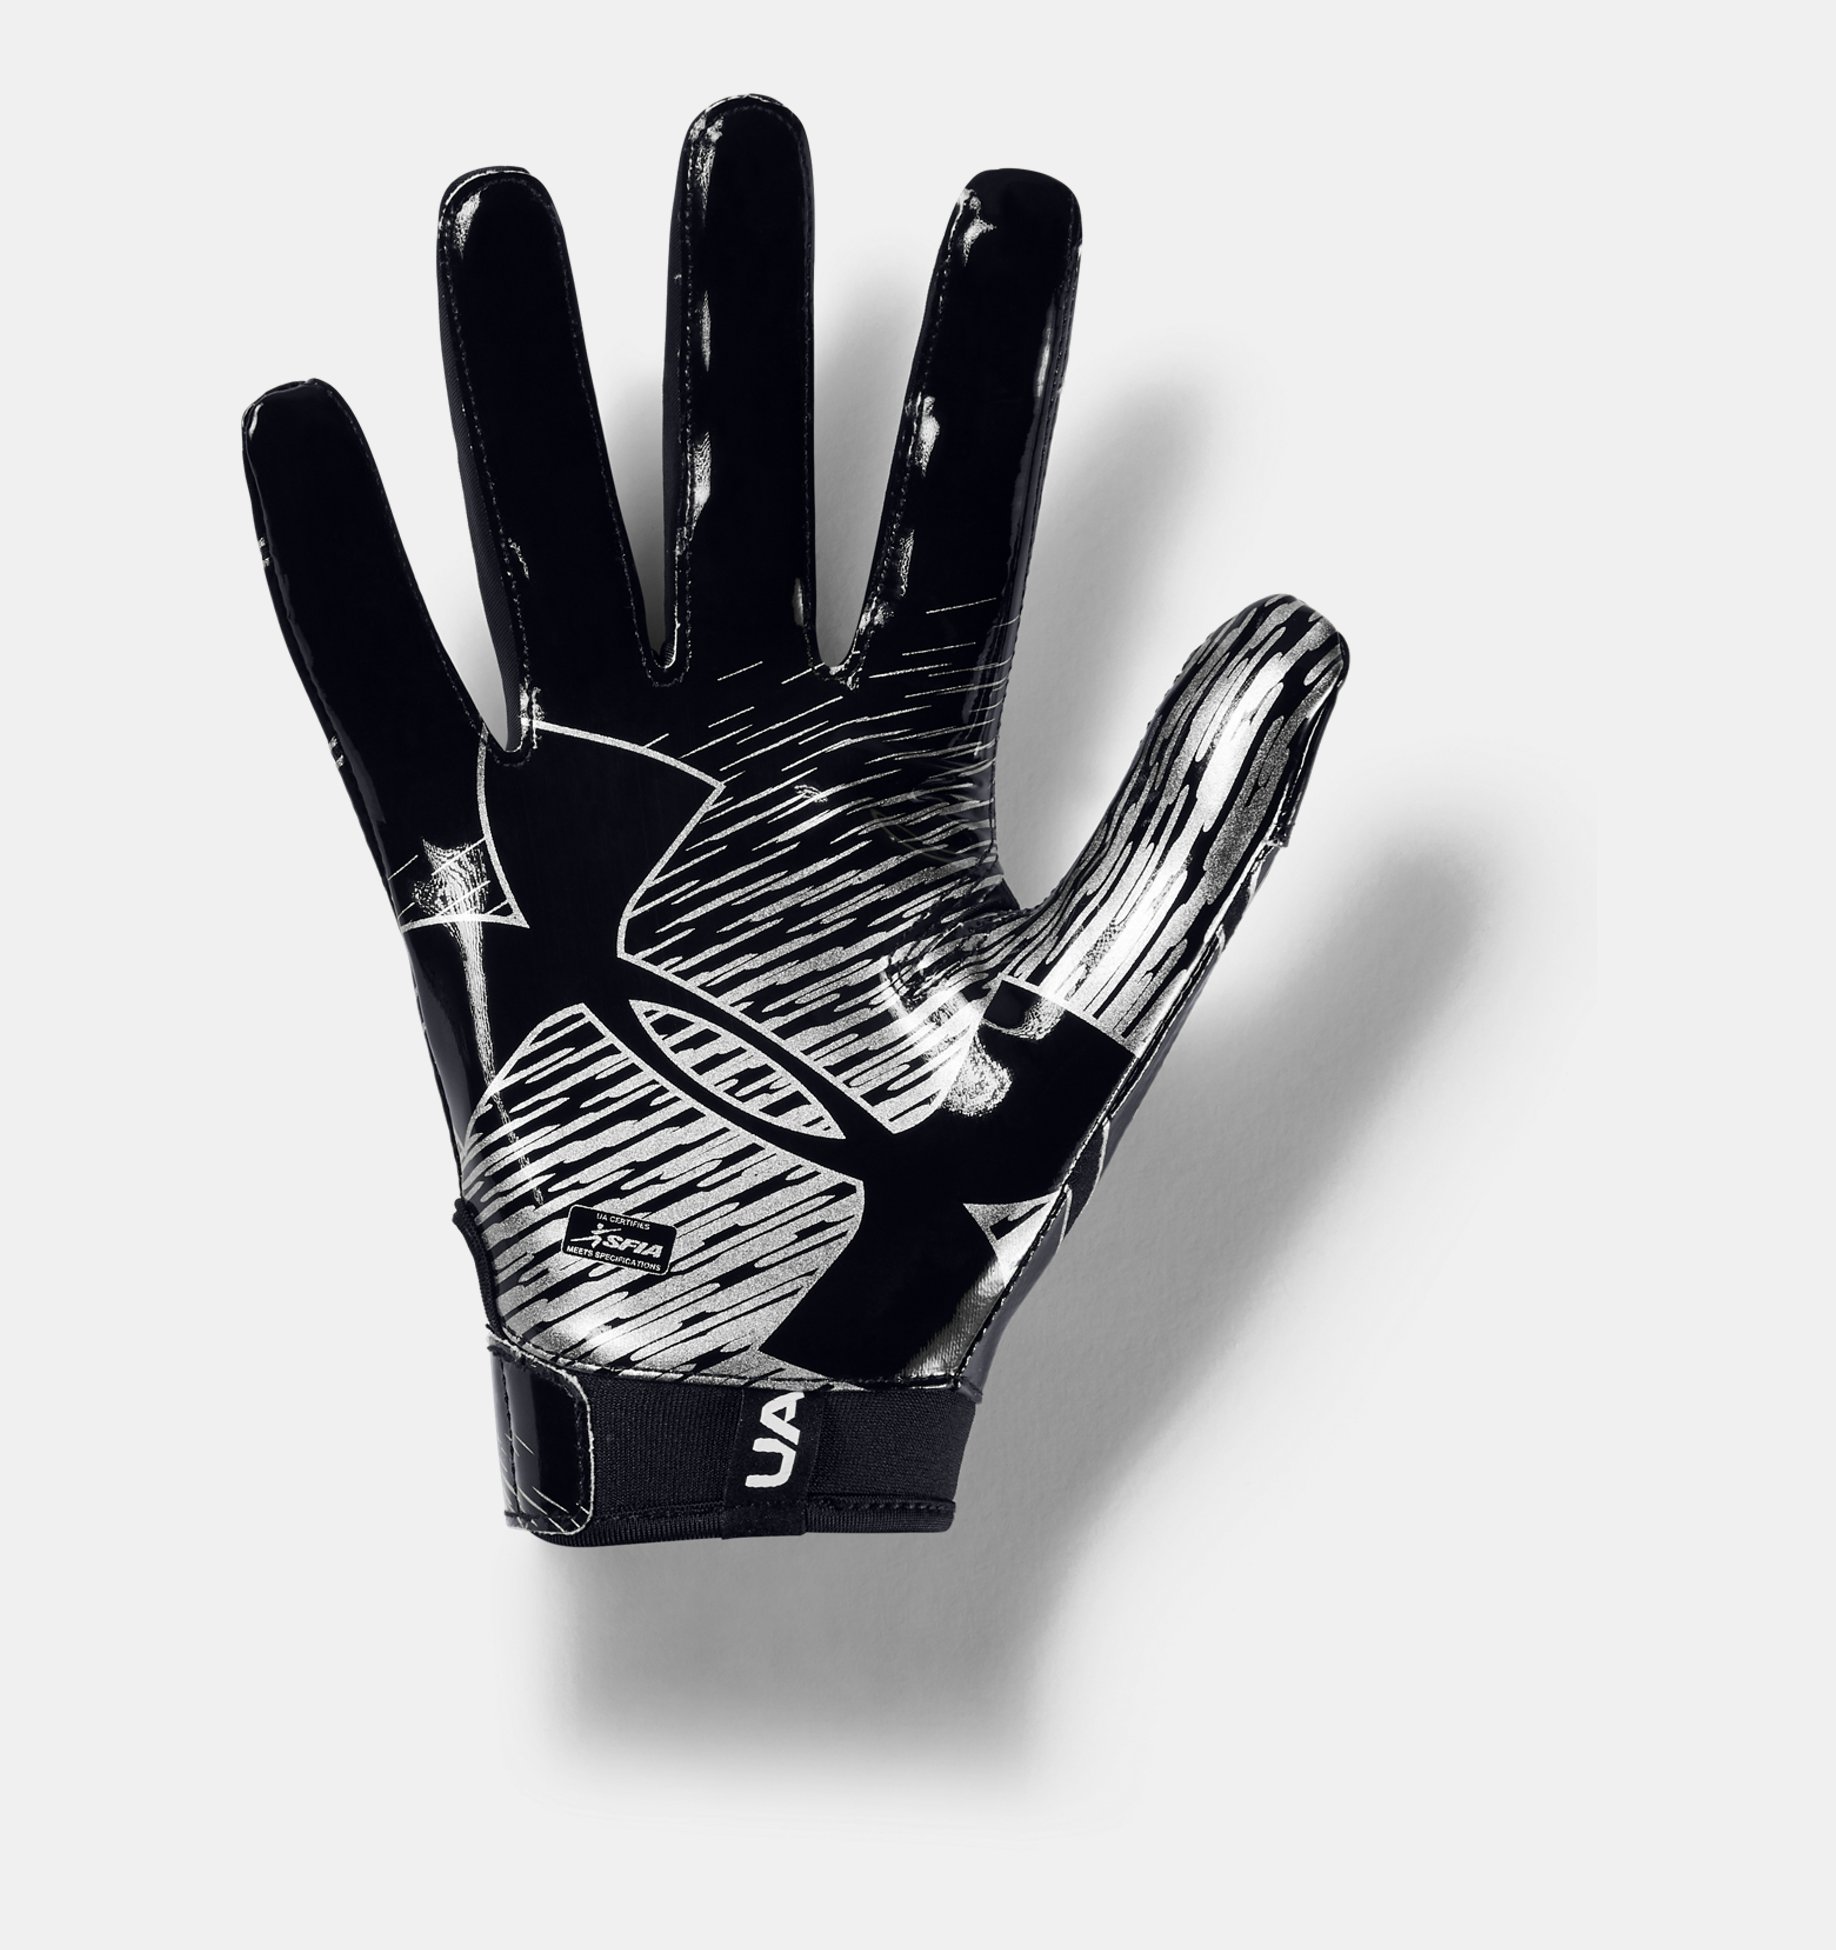 Under Armour F6 Glue Grip Football Gloves Men's Sz MD for sale online 